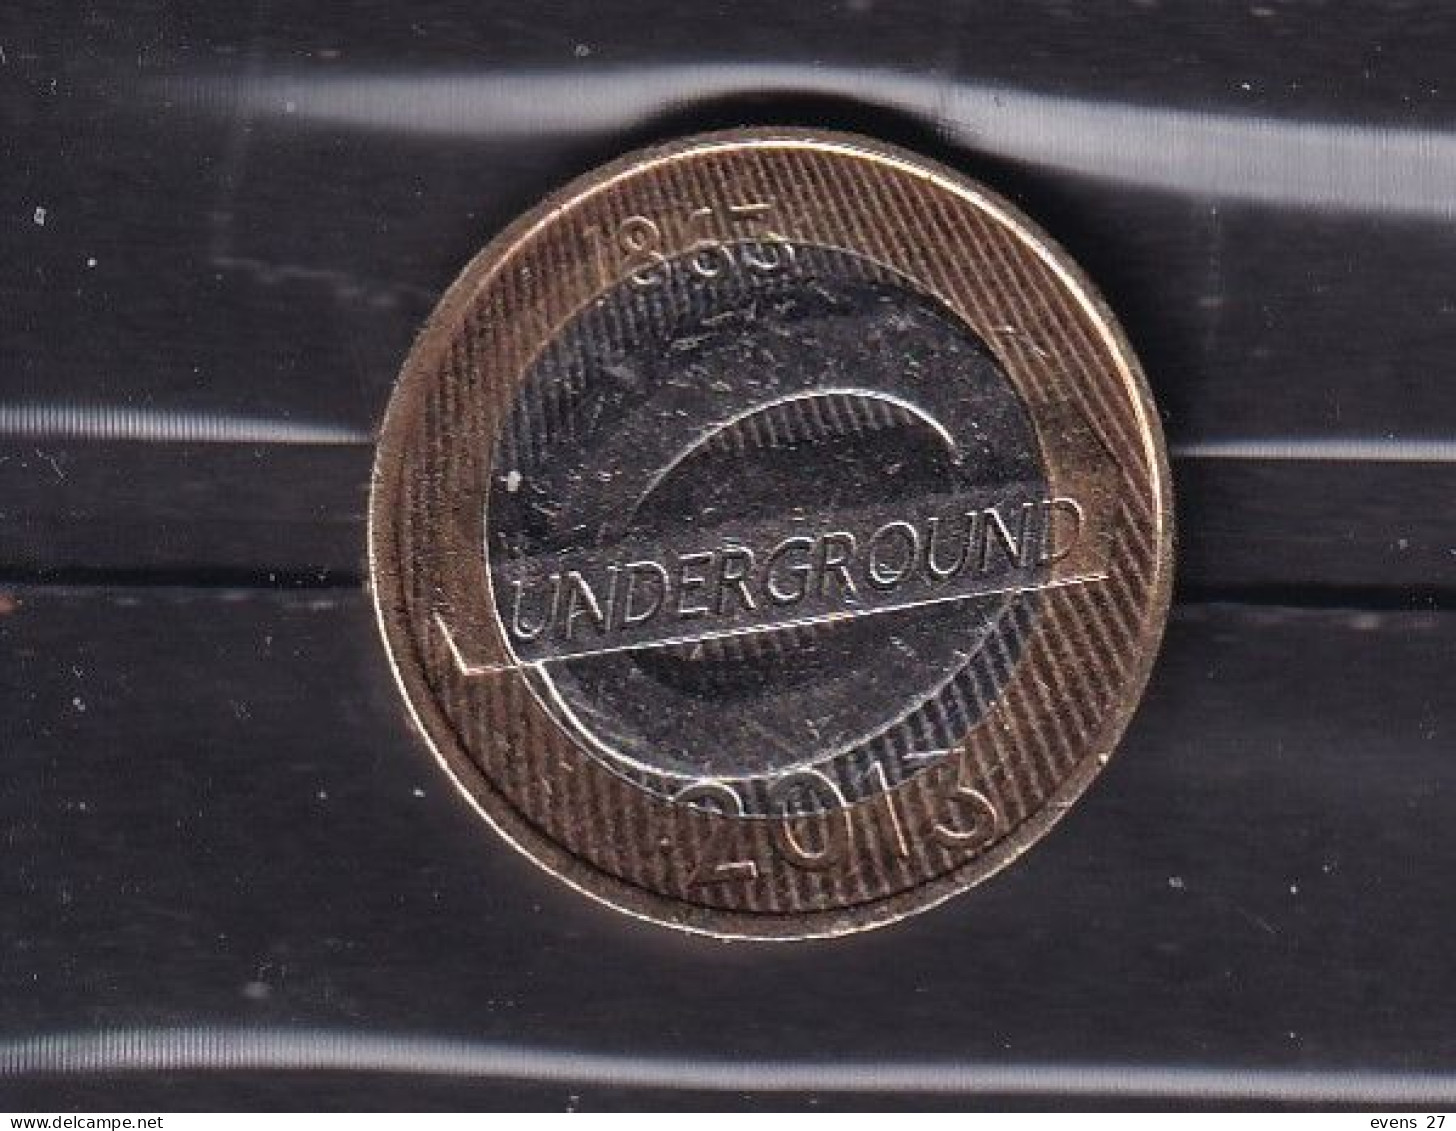 GREAT BRITAIN £2-2013  BI -METALLIC COIN LONDON UNDERGROUND TRAINS-CIRCULATED - 2 Pounds